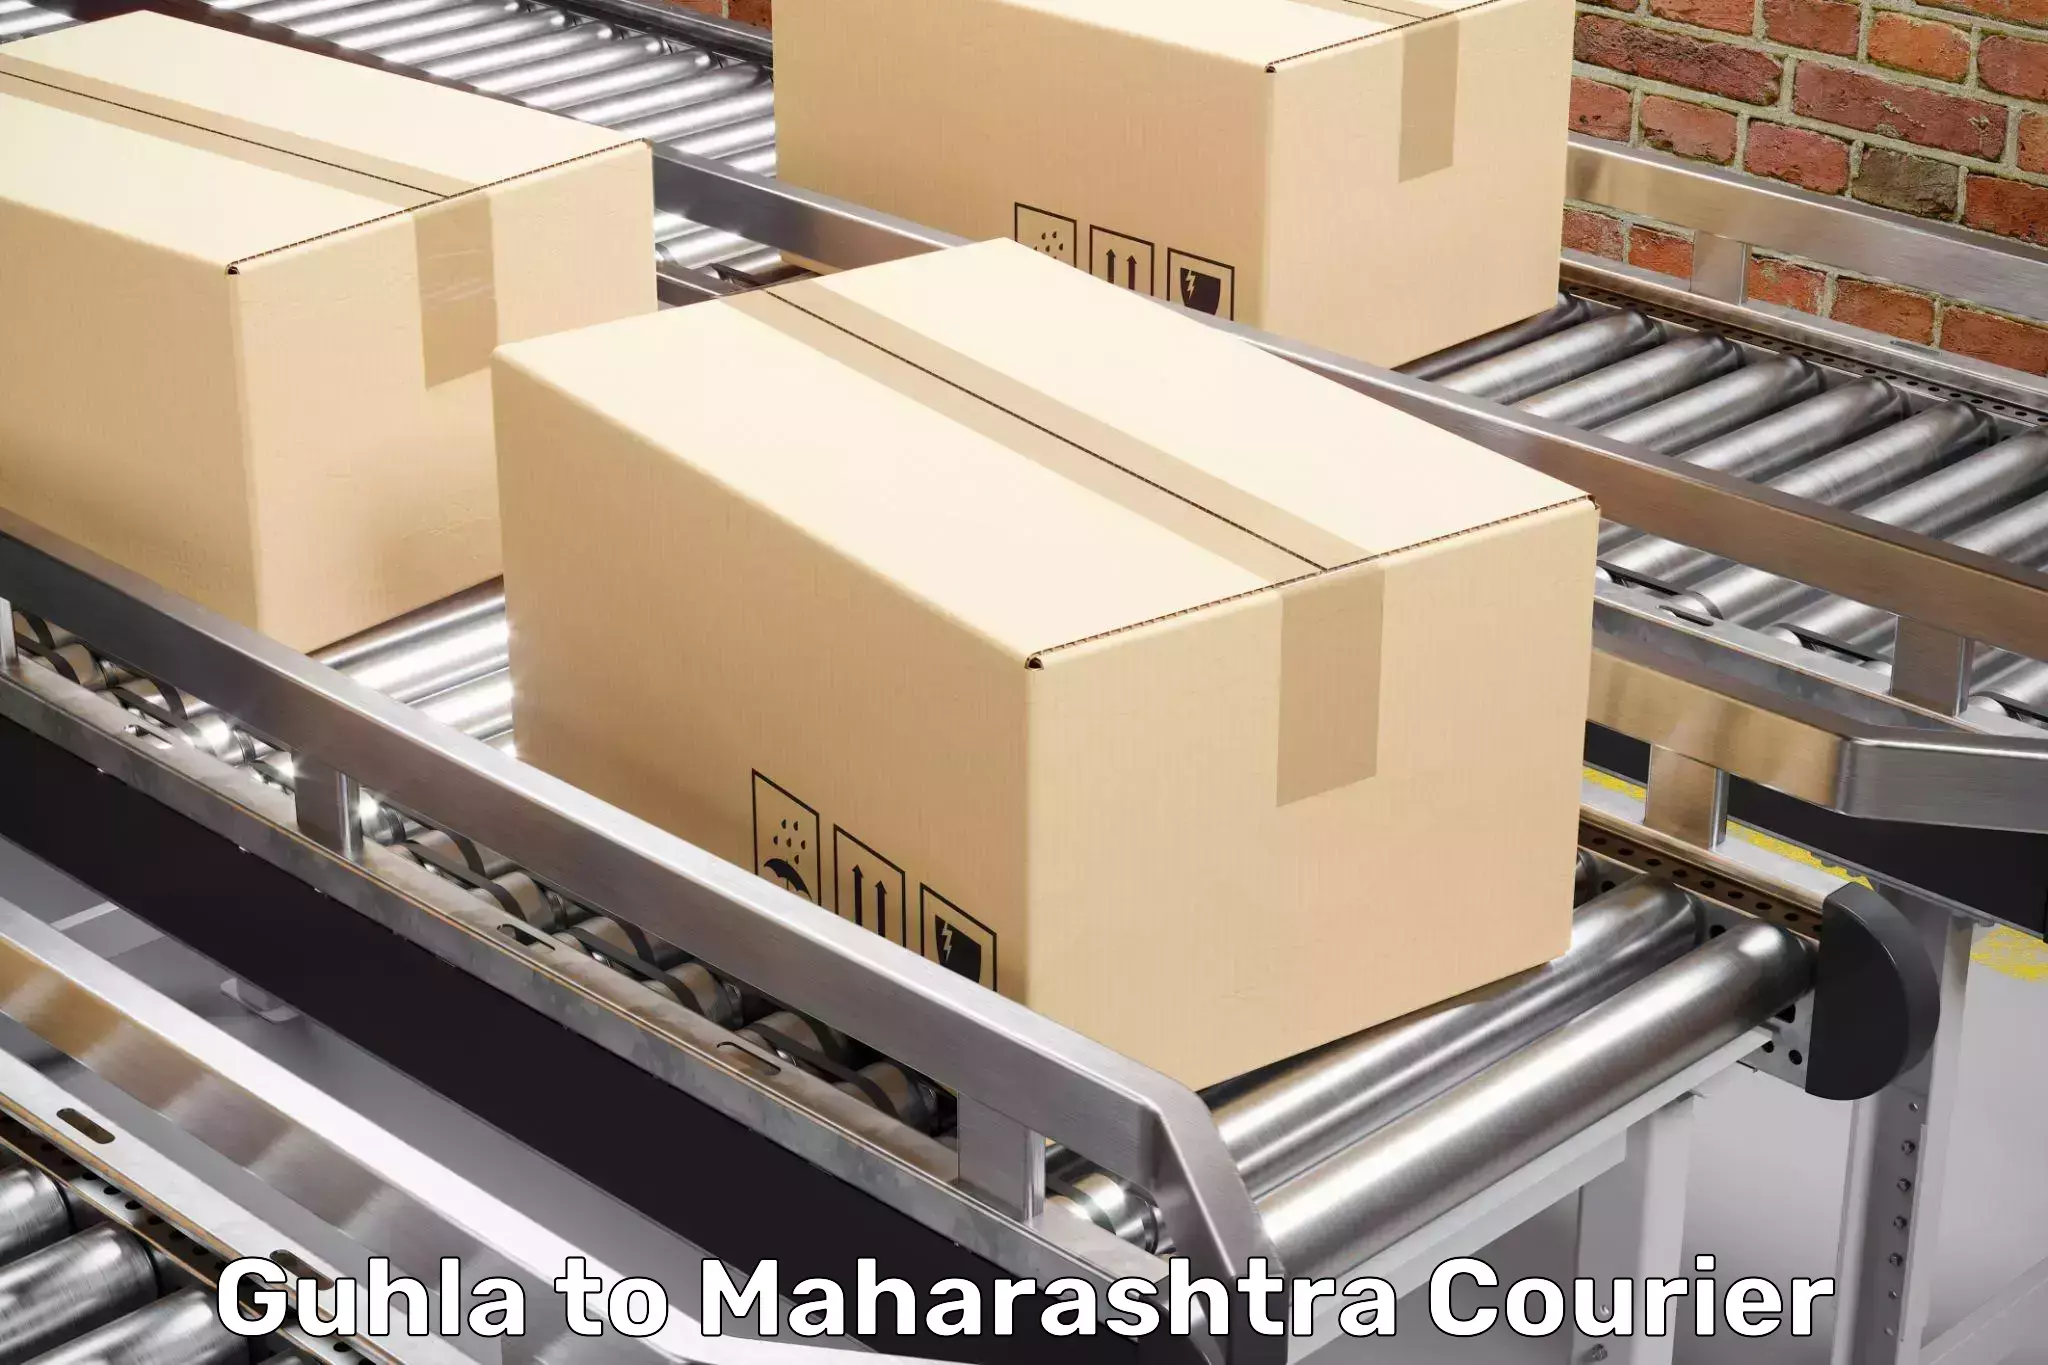 Professional movers and packers Guhla to Navi Mumbai